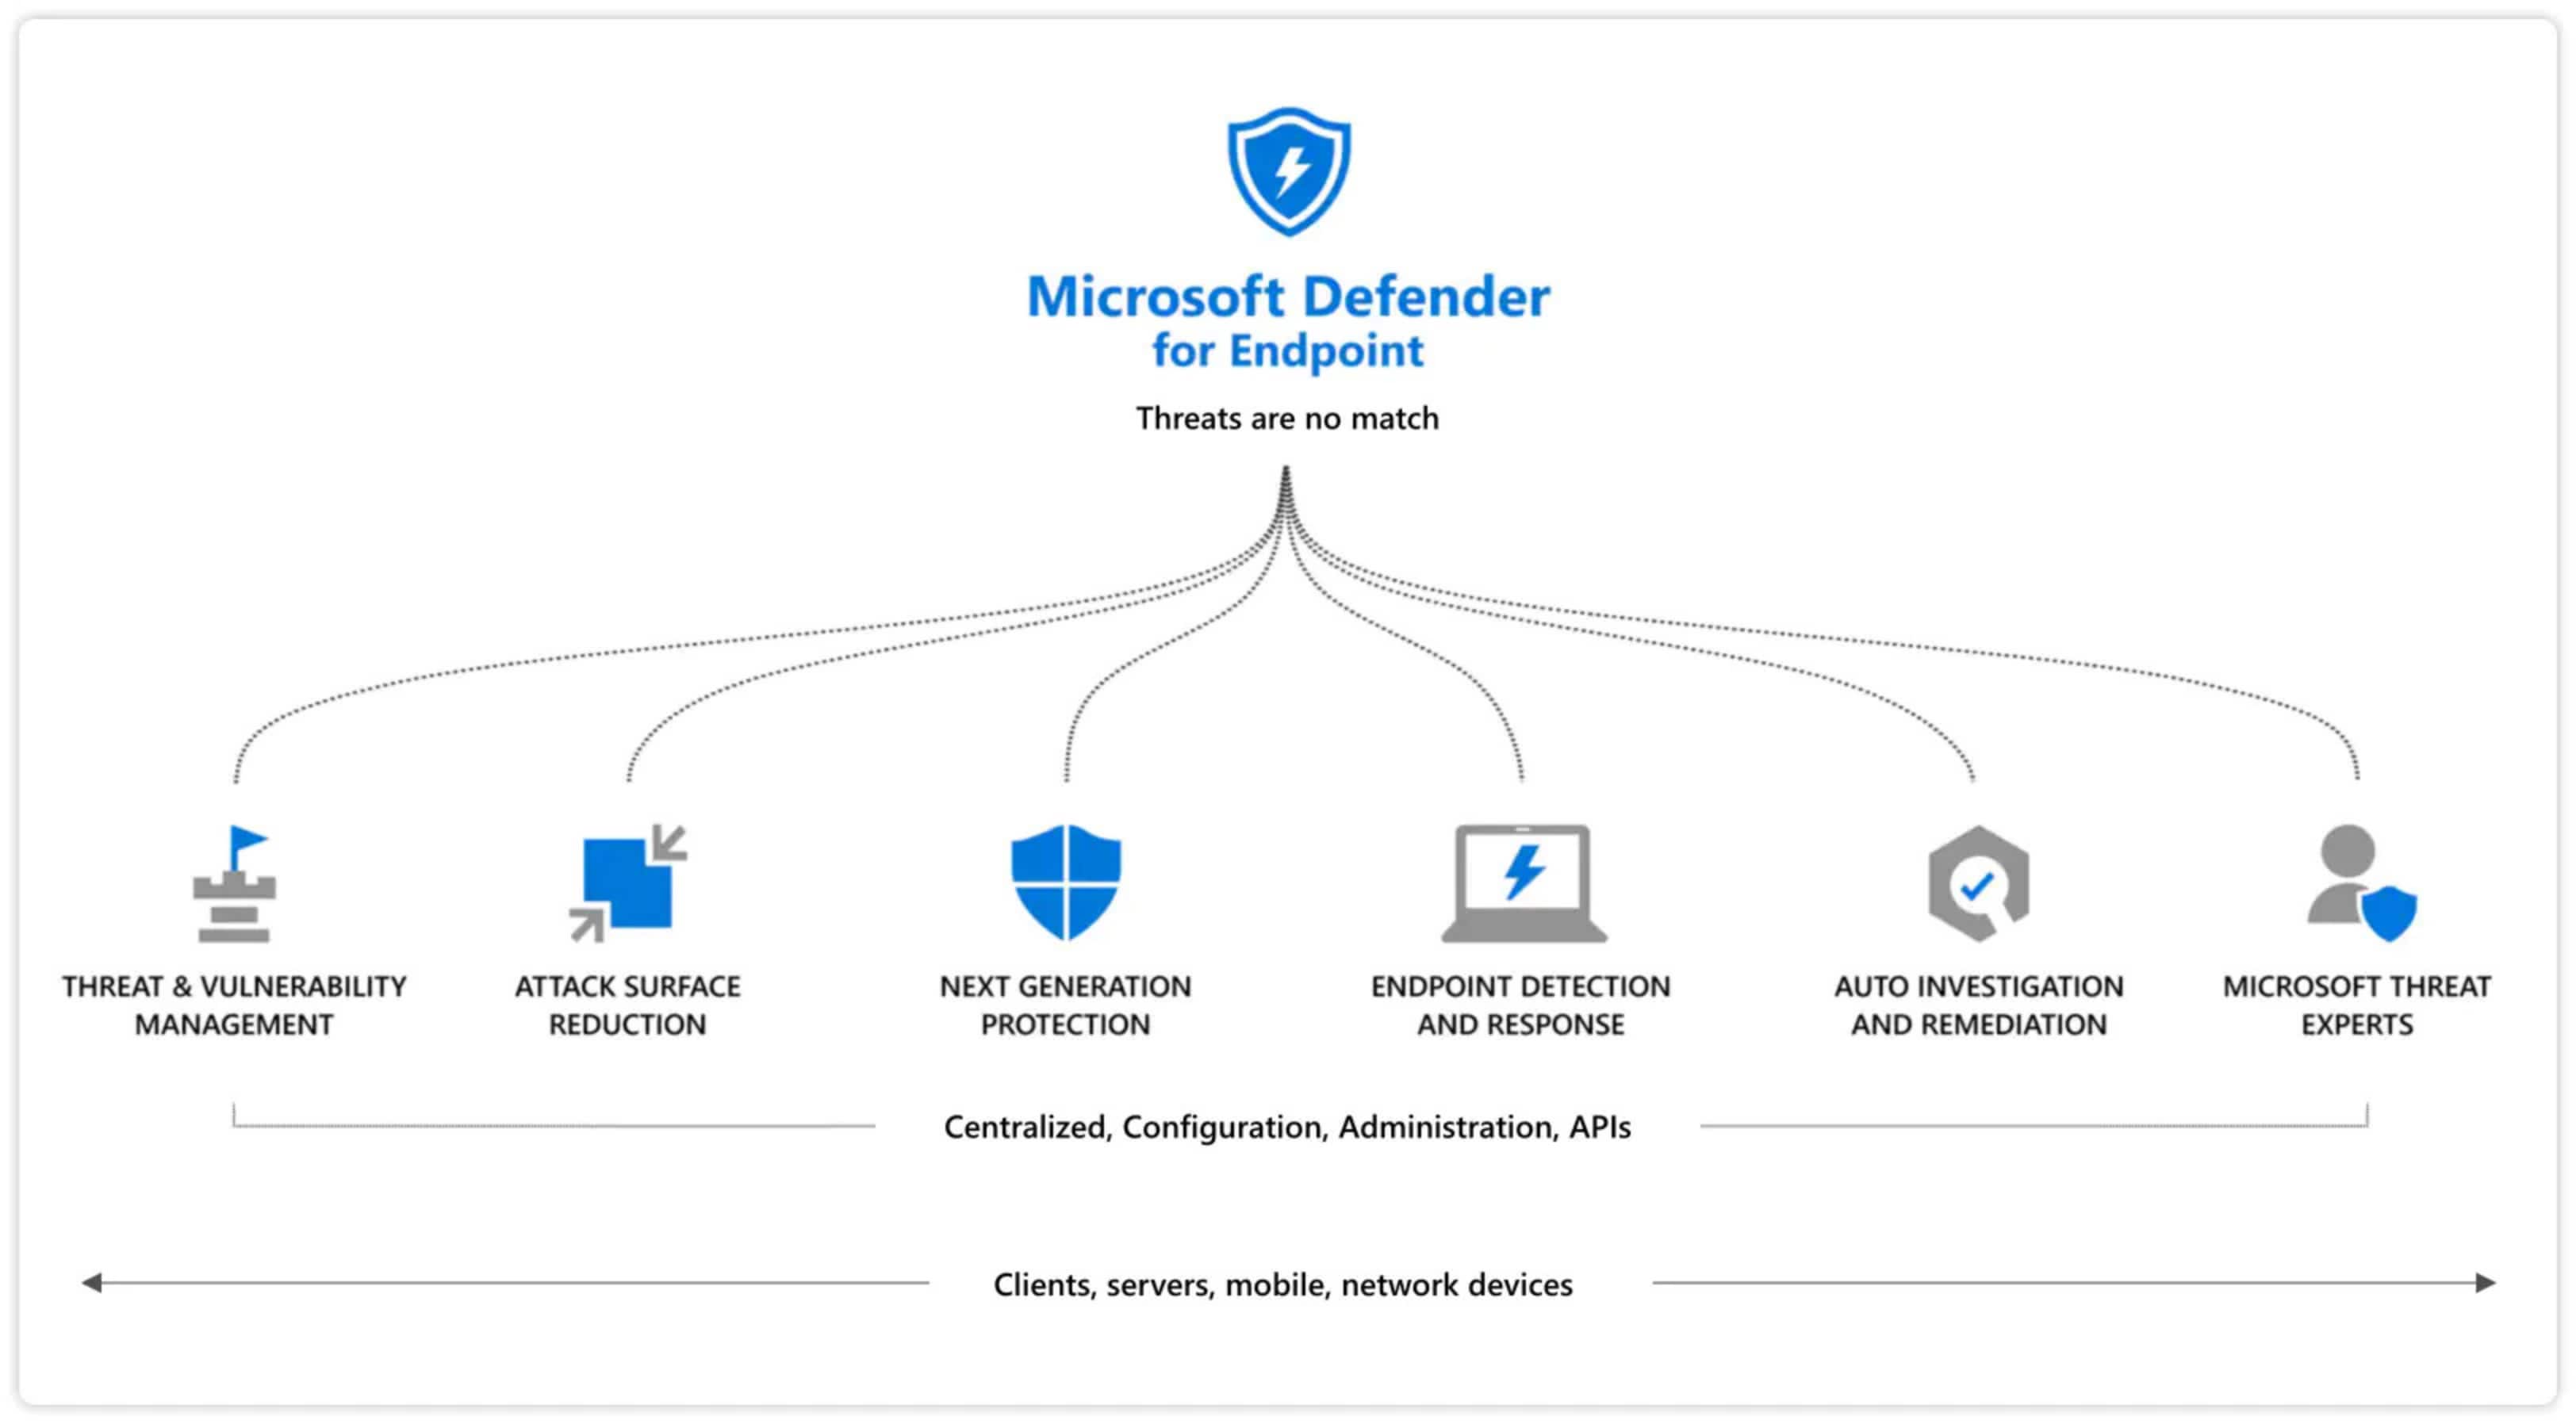 Is Microsoft Defender an Edr?